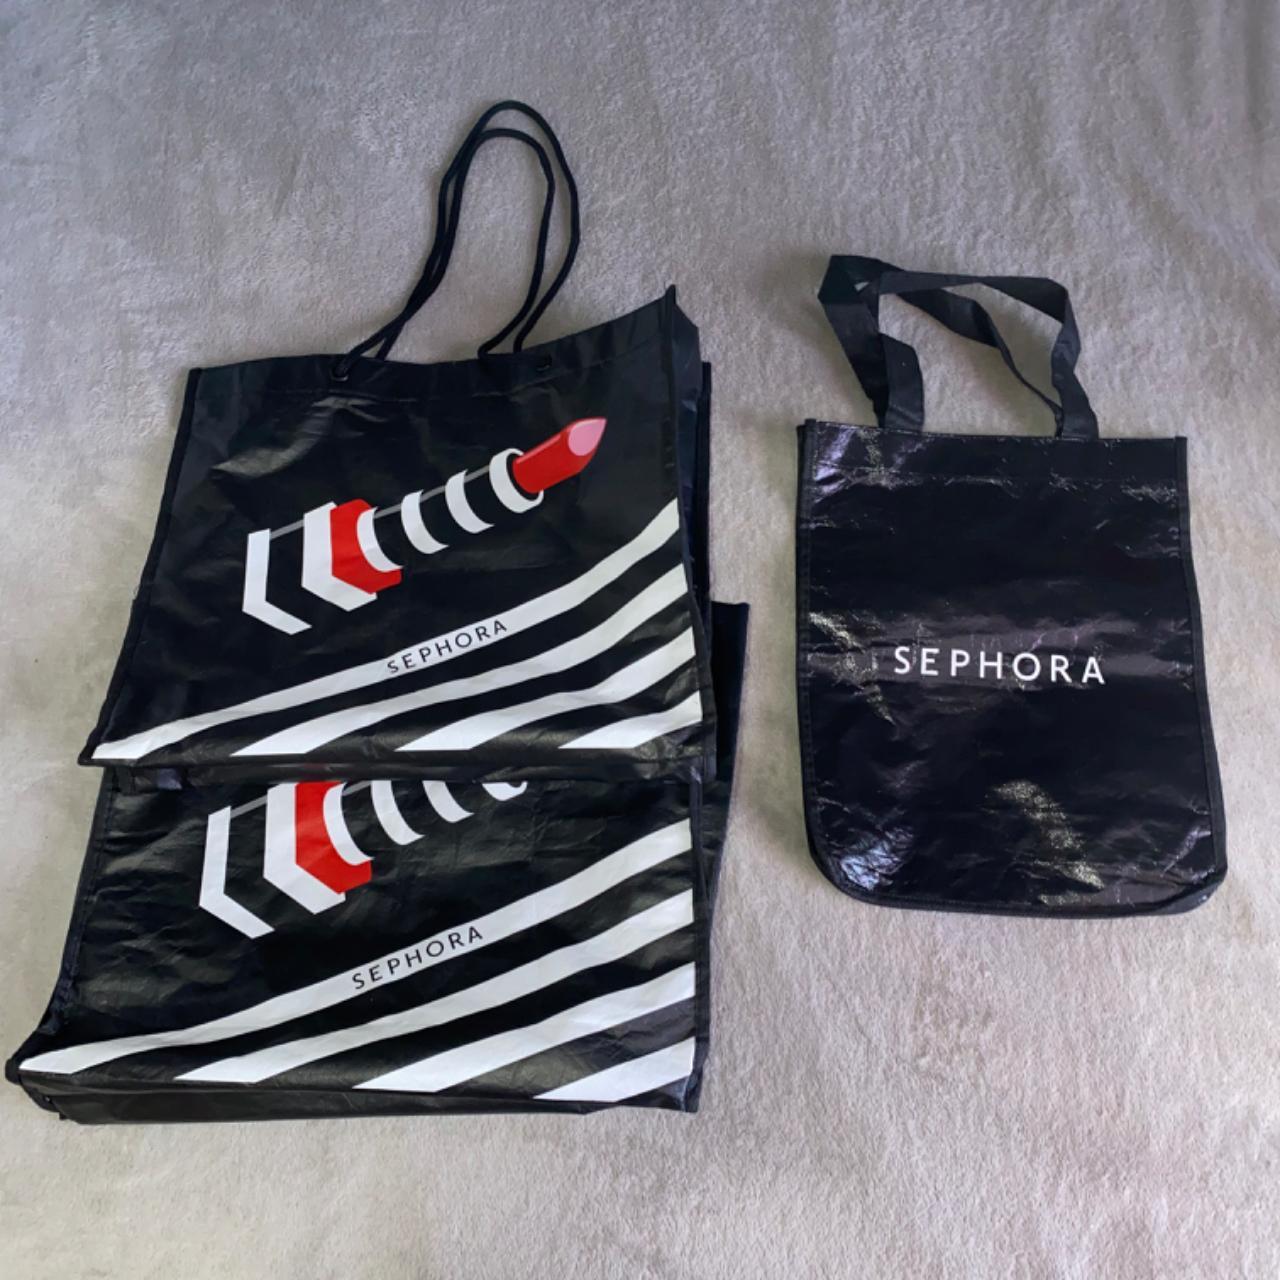 Sephora Women's Black and White Bag